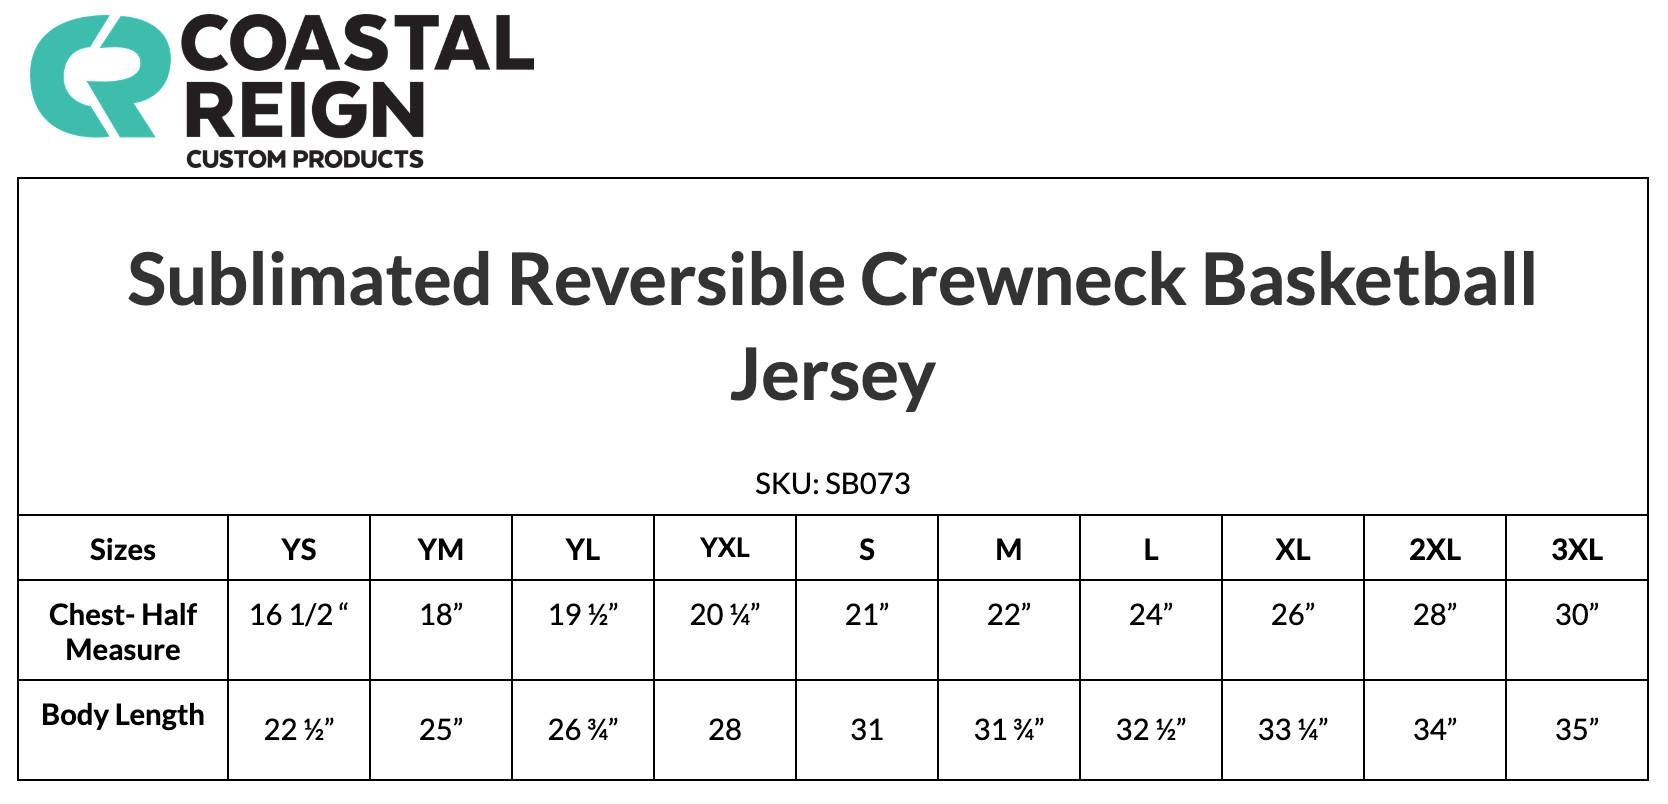 Custom Sublimated Reversible Crew Neck Basketball Jersey - Coastal